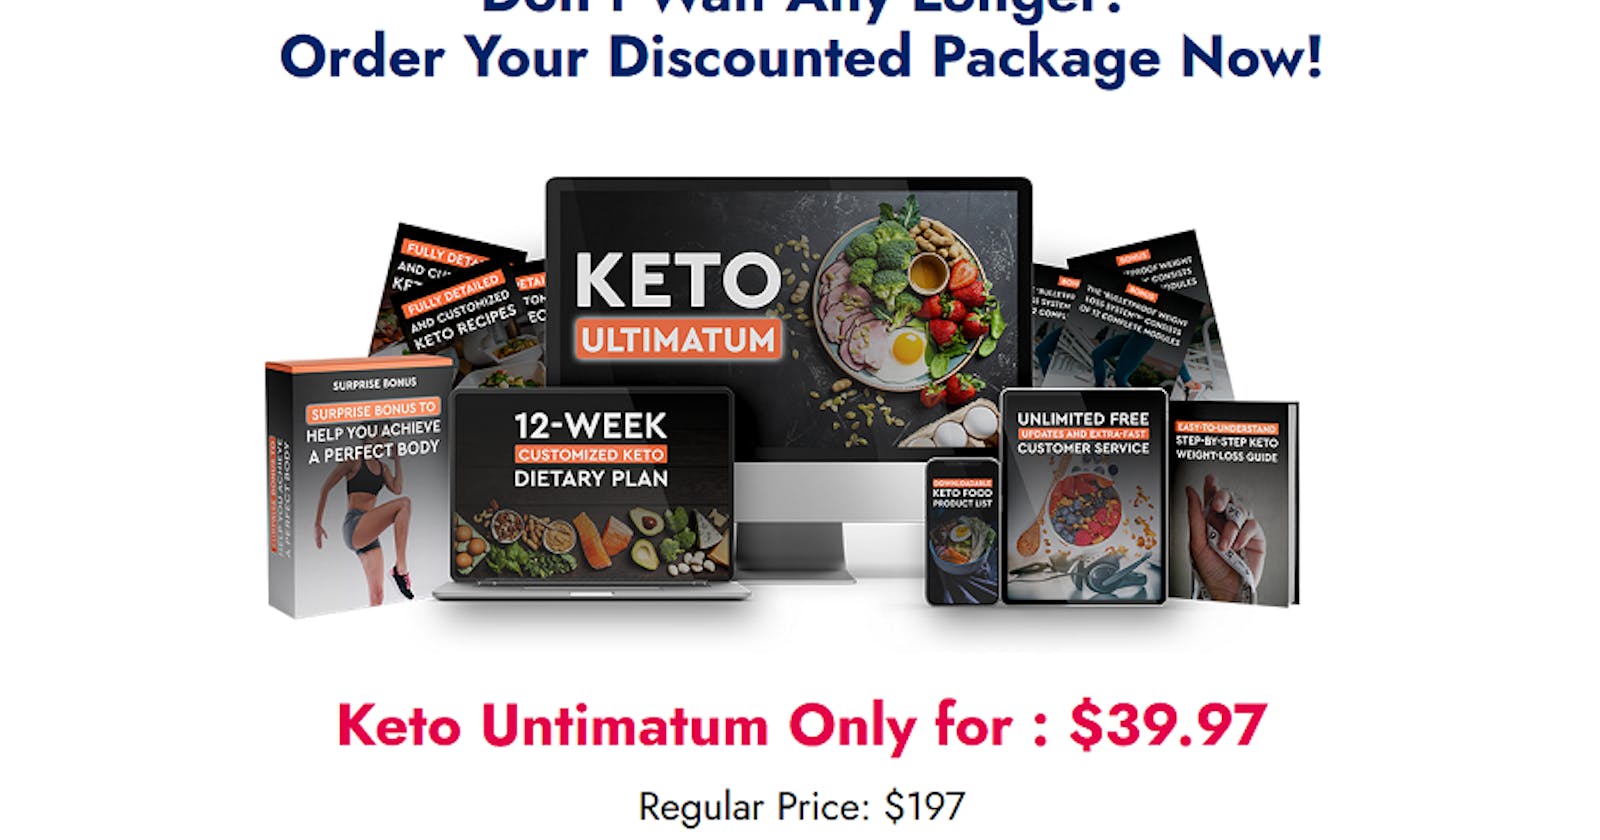 Keto Ultimatum (Custom Diet Plan) 12 modules Ebook, Permanent Weight Loss While Still Eating!